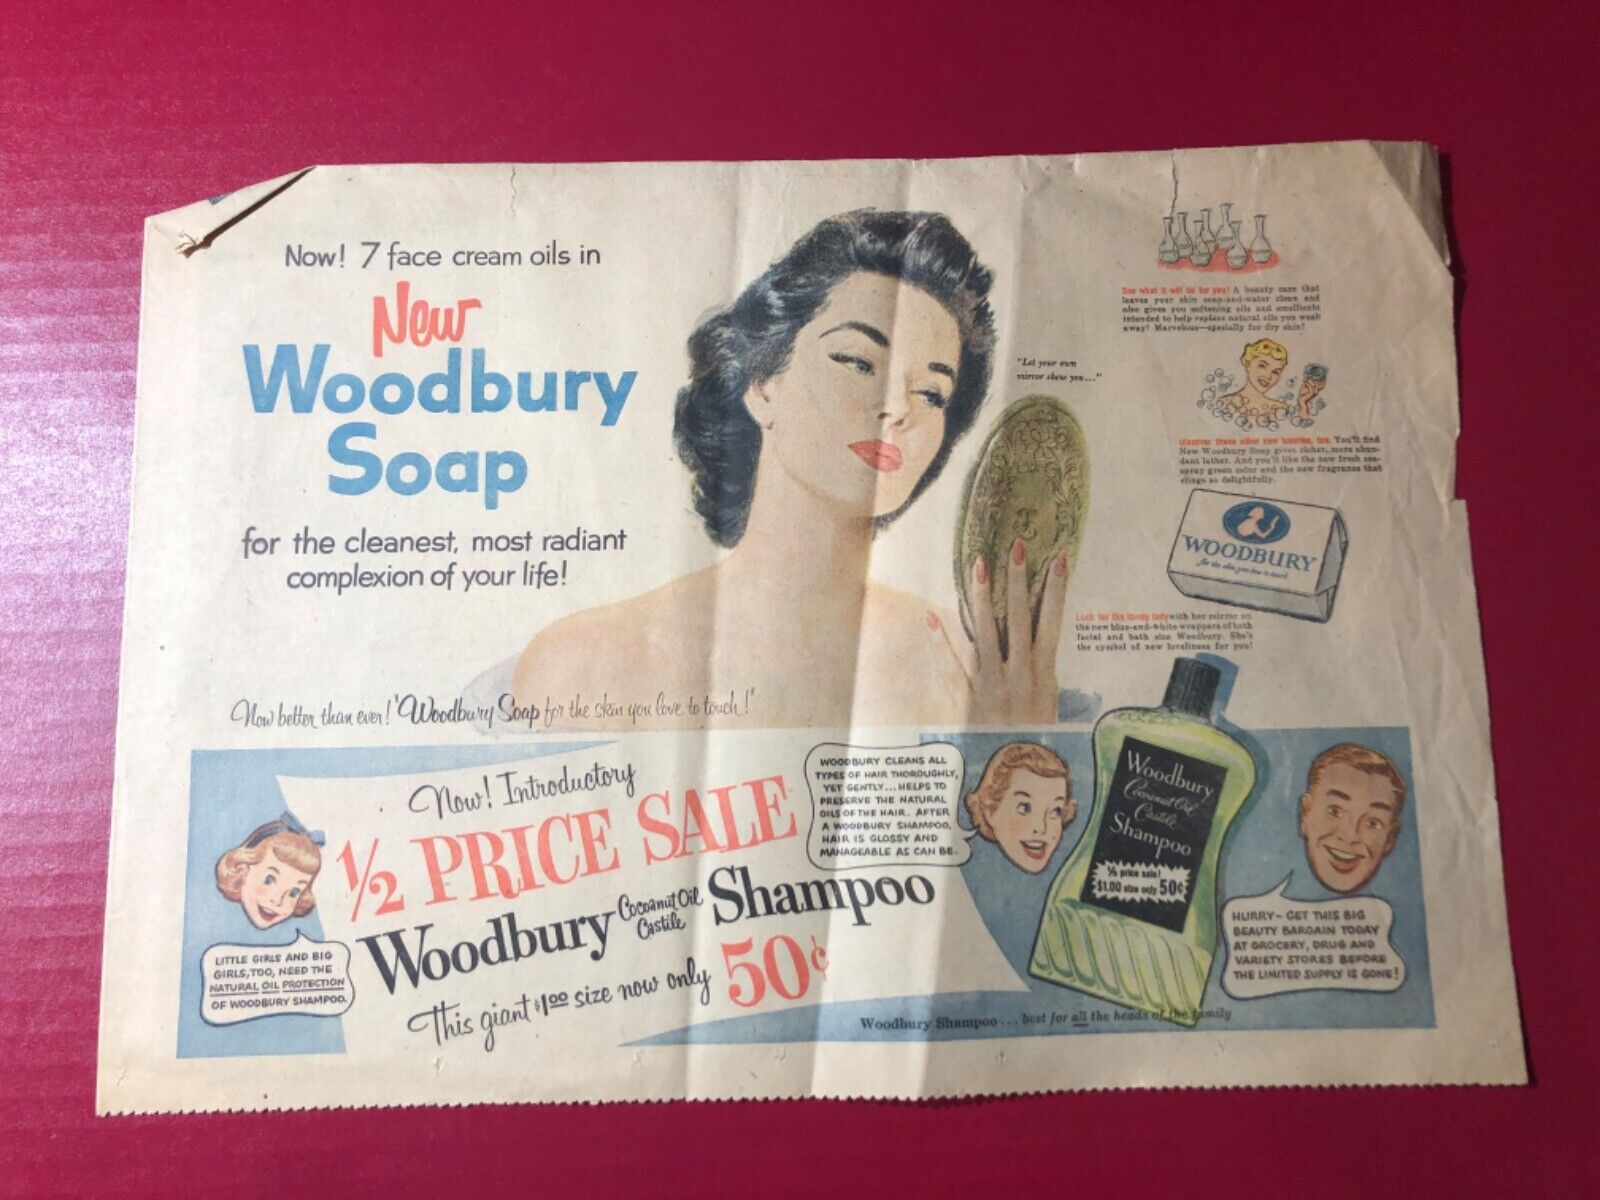 1950’s NEW Woodbury Soap Coconut Oil Castile Shampoo print ad 15x10.5”